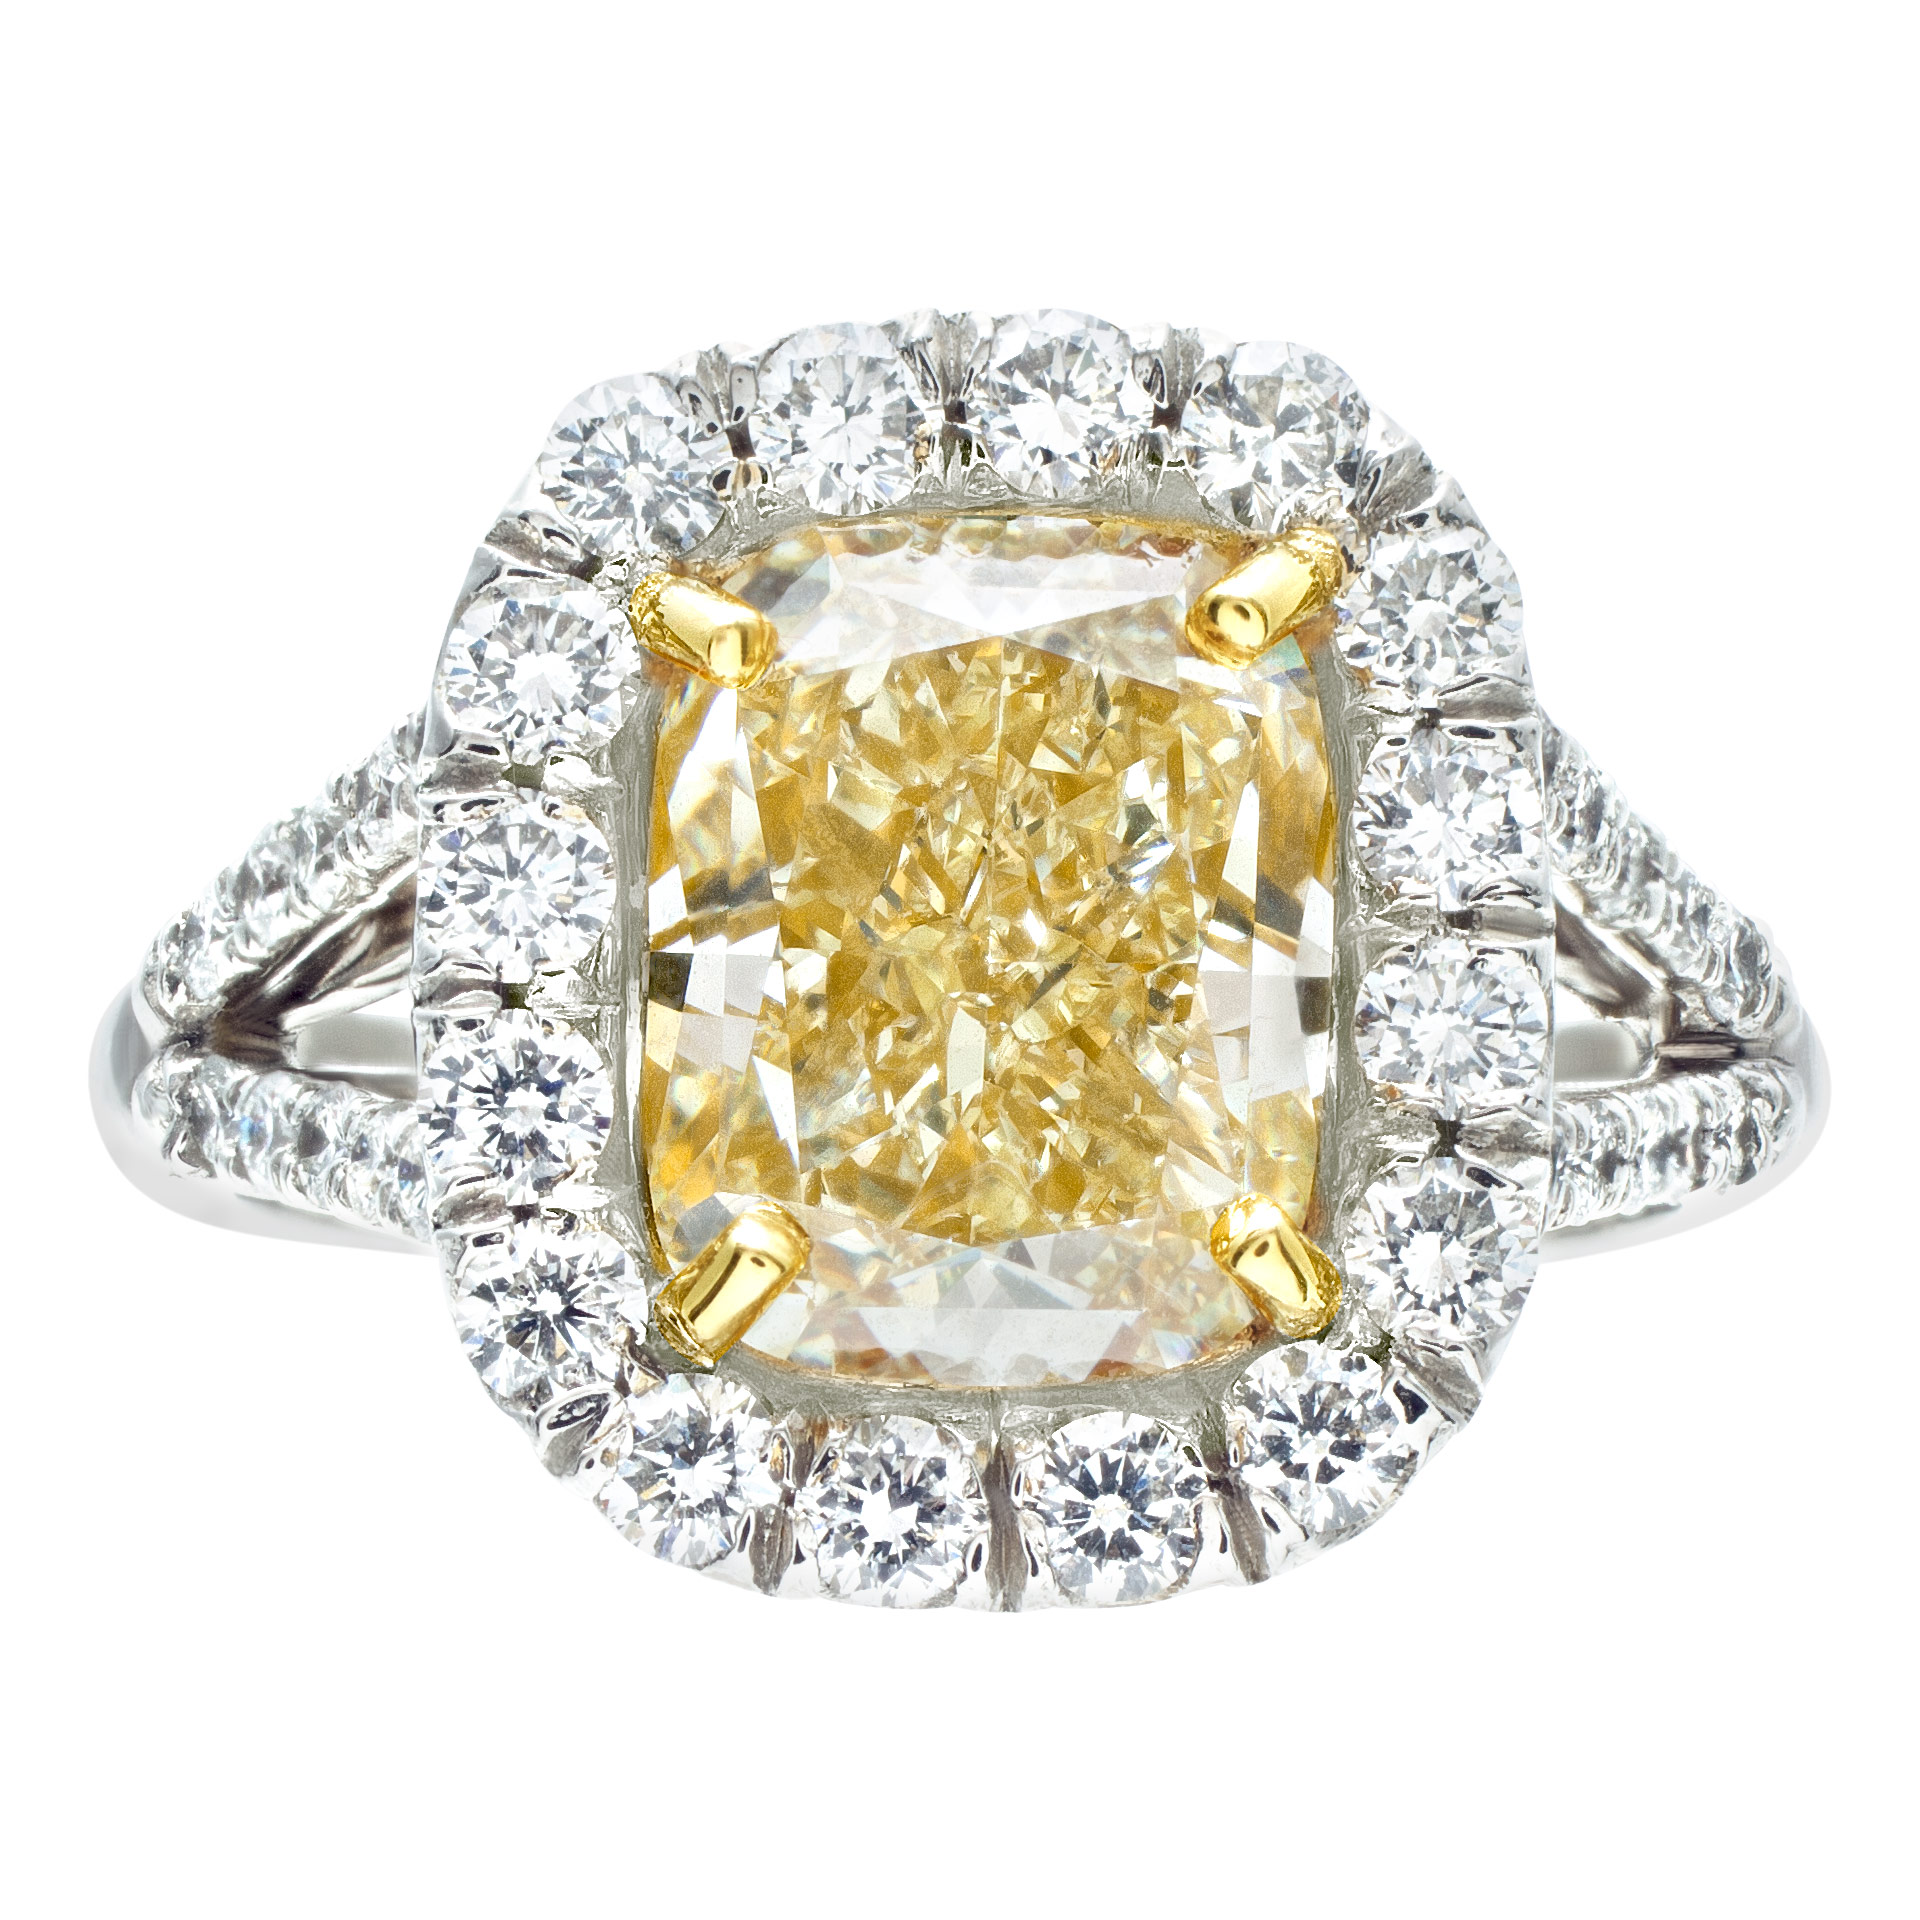 GIA certified 3.02 ct diamond ring fancy light yellow VVS2 clarity